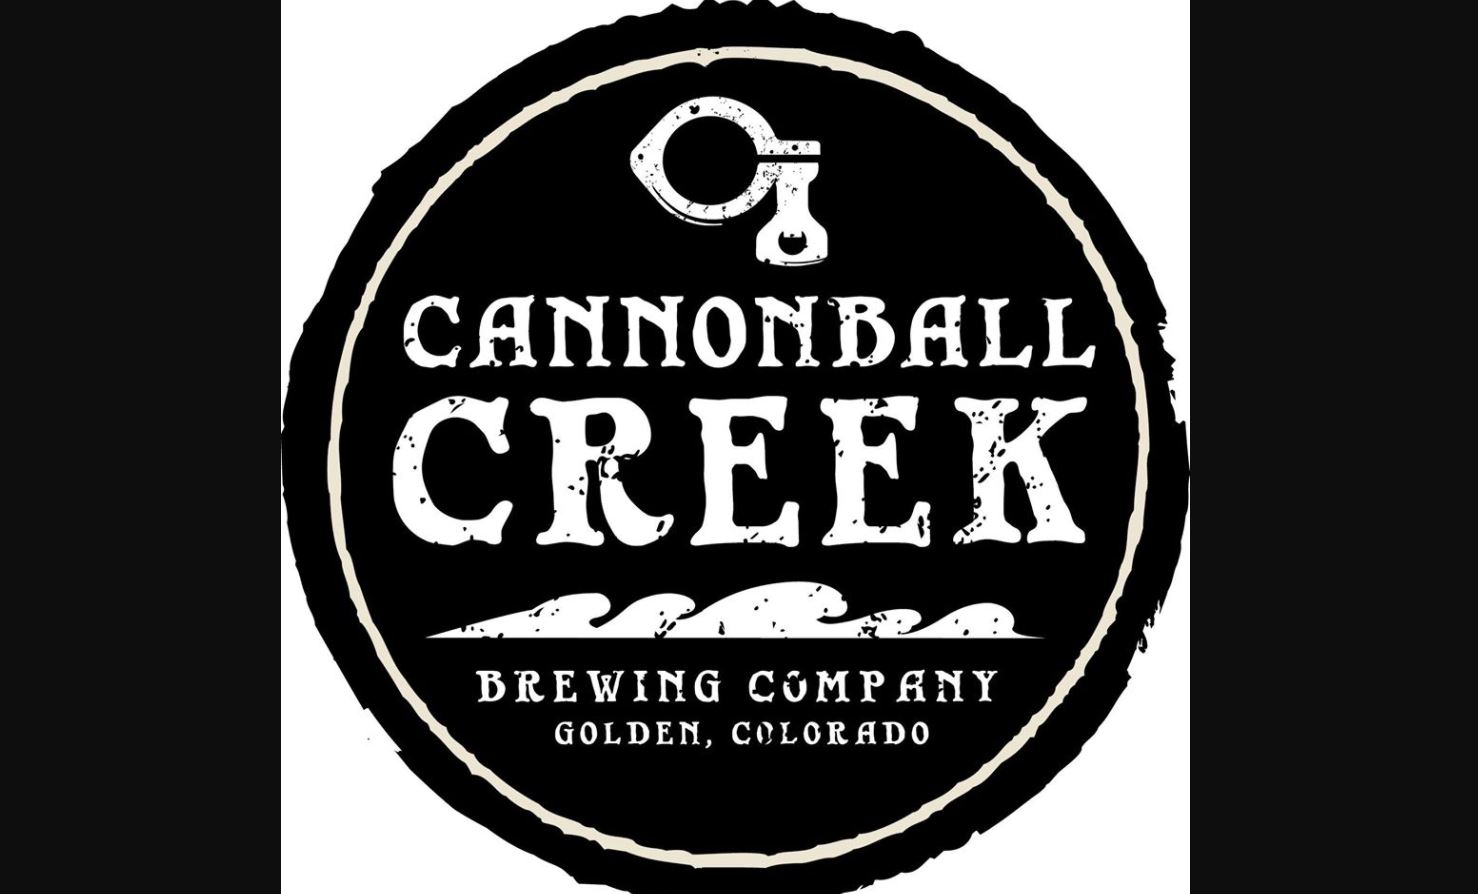 Cannonball Creek Netflix and Pils